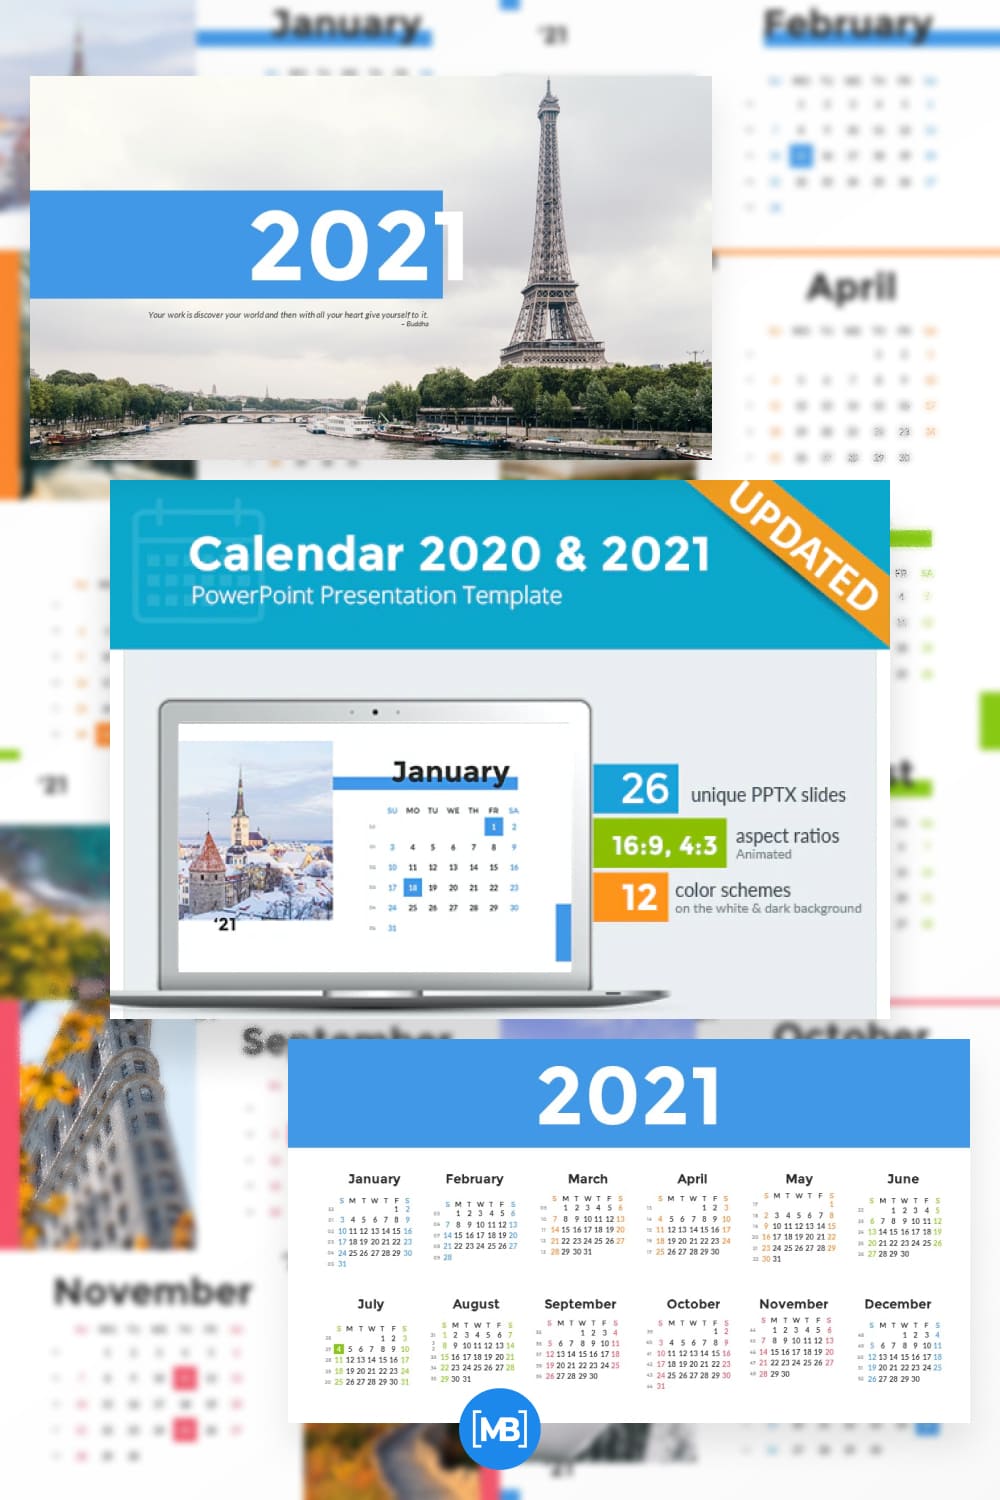 Calendar 2021 and 2020 powerpoint presentation template.